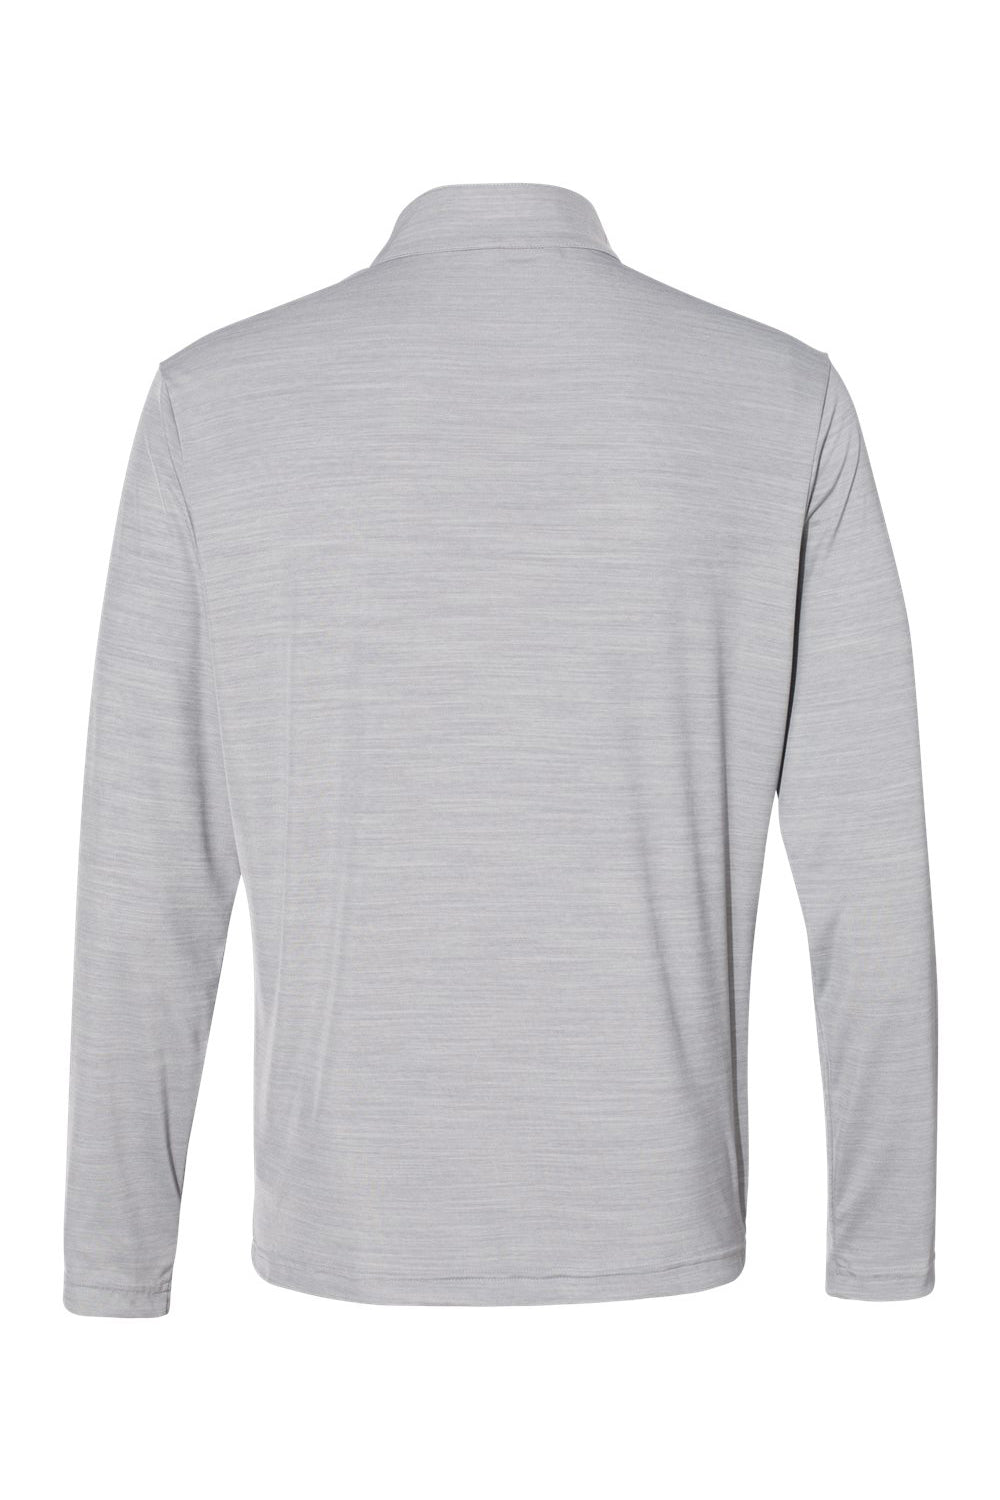 Adidas A475 Mens Moisture Wicking 1/4 Zip Sweatshirt Mid Grey Melange Flat Back